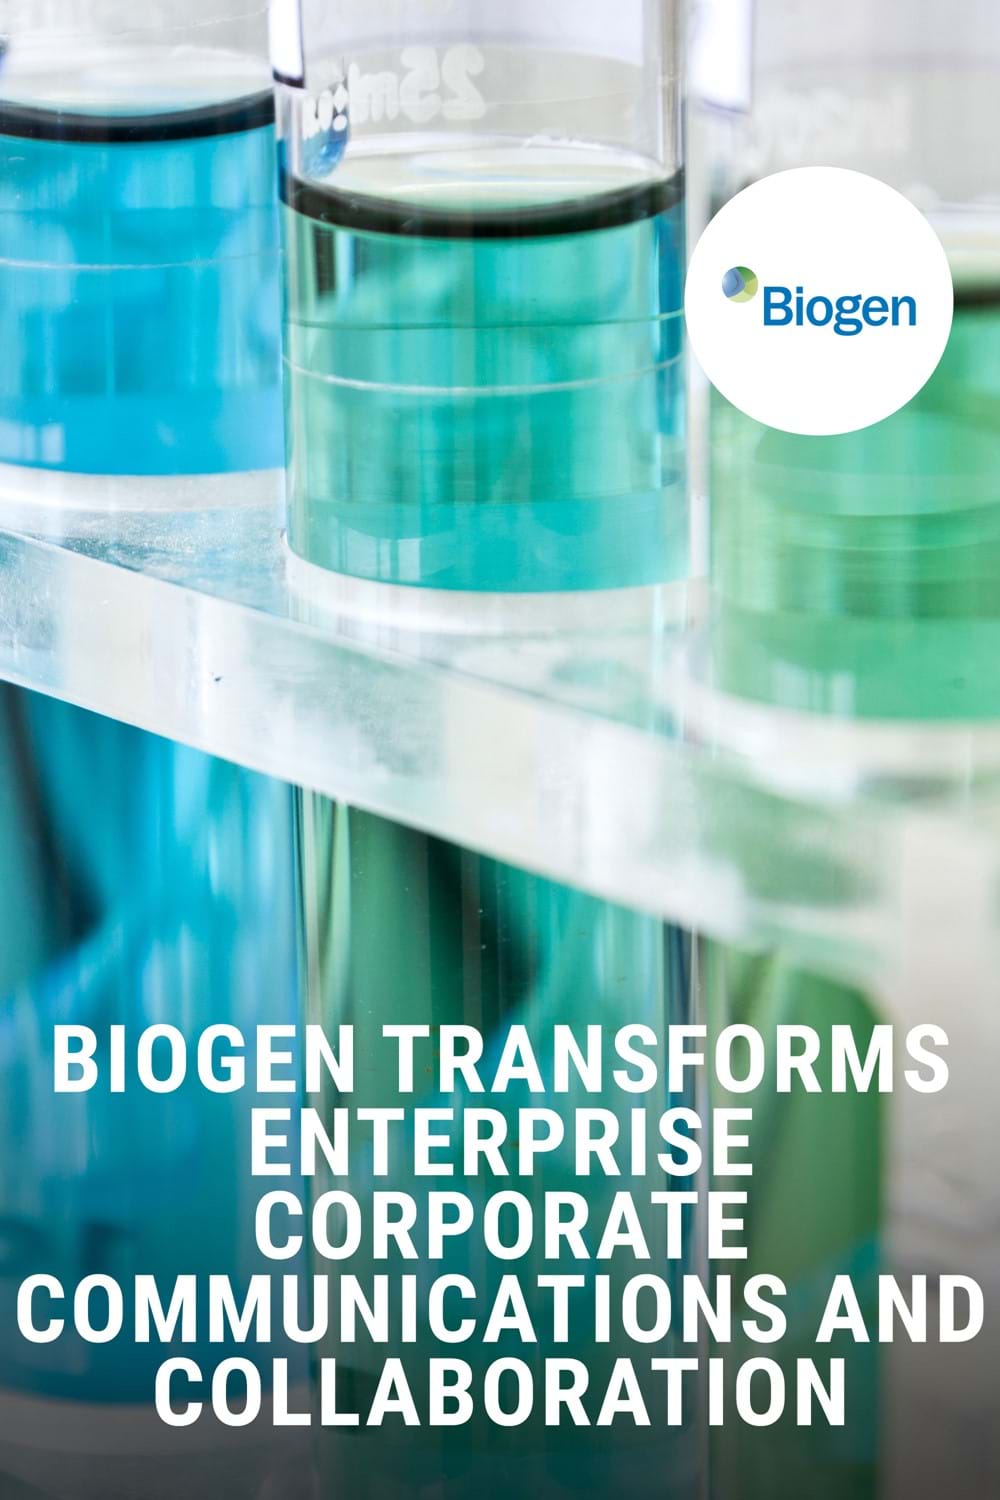 'Biogen transforms enterprise corporate communications and collaboration' case study flat pages